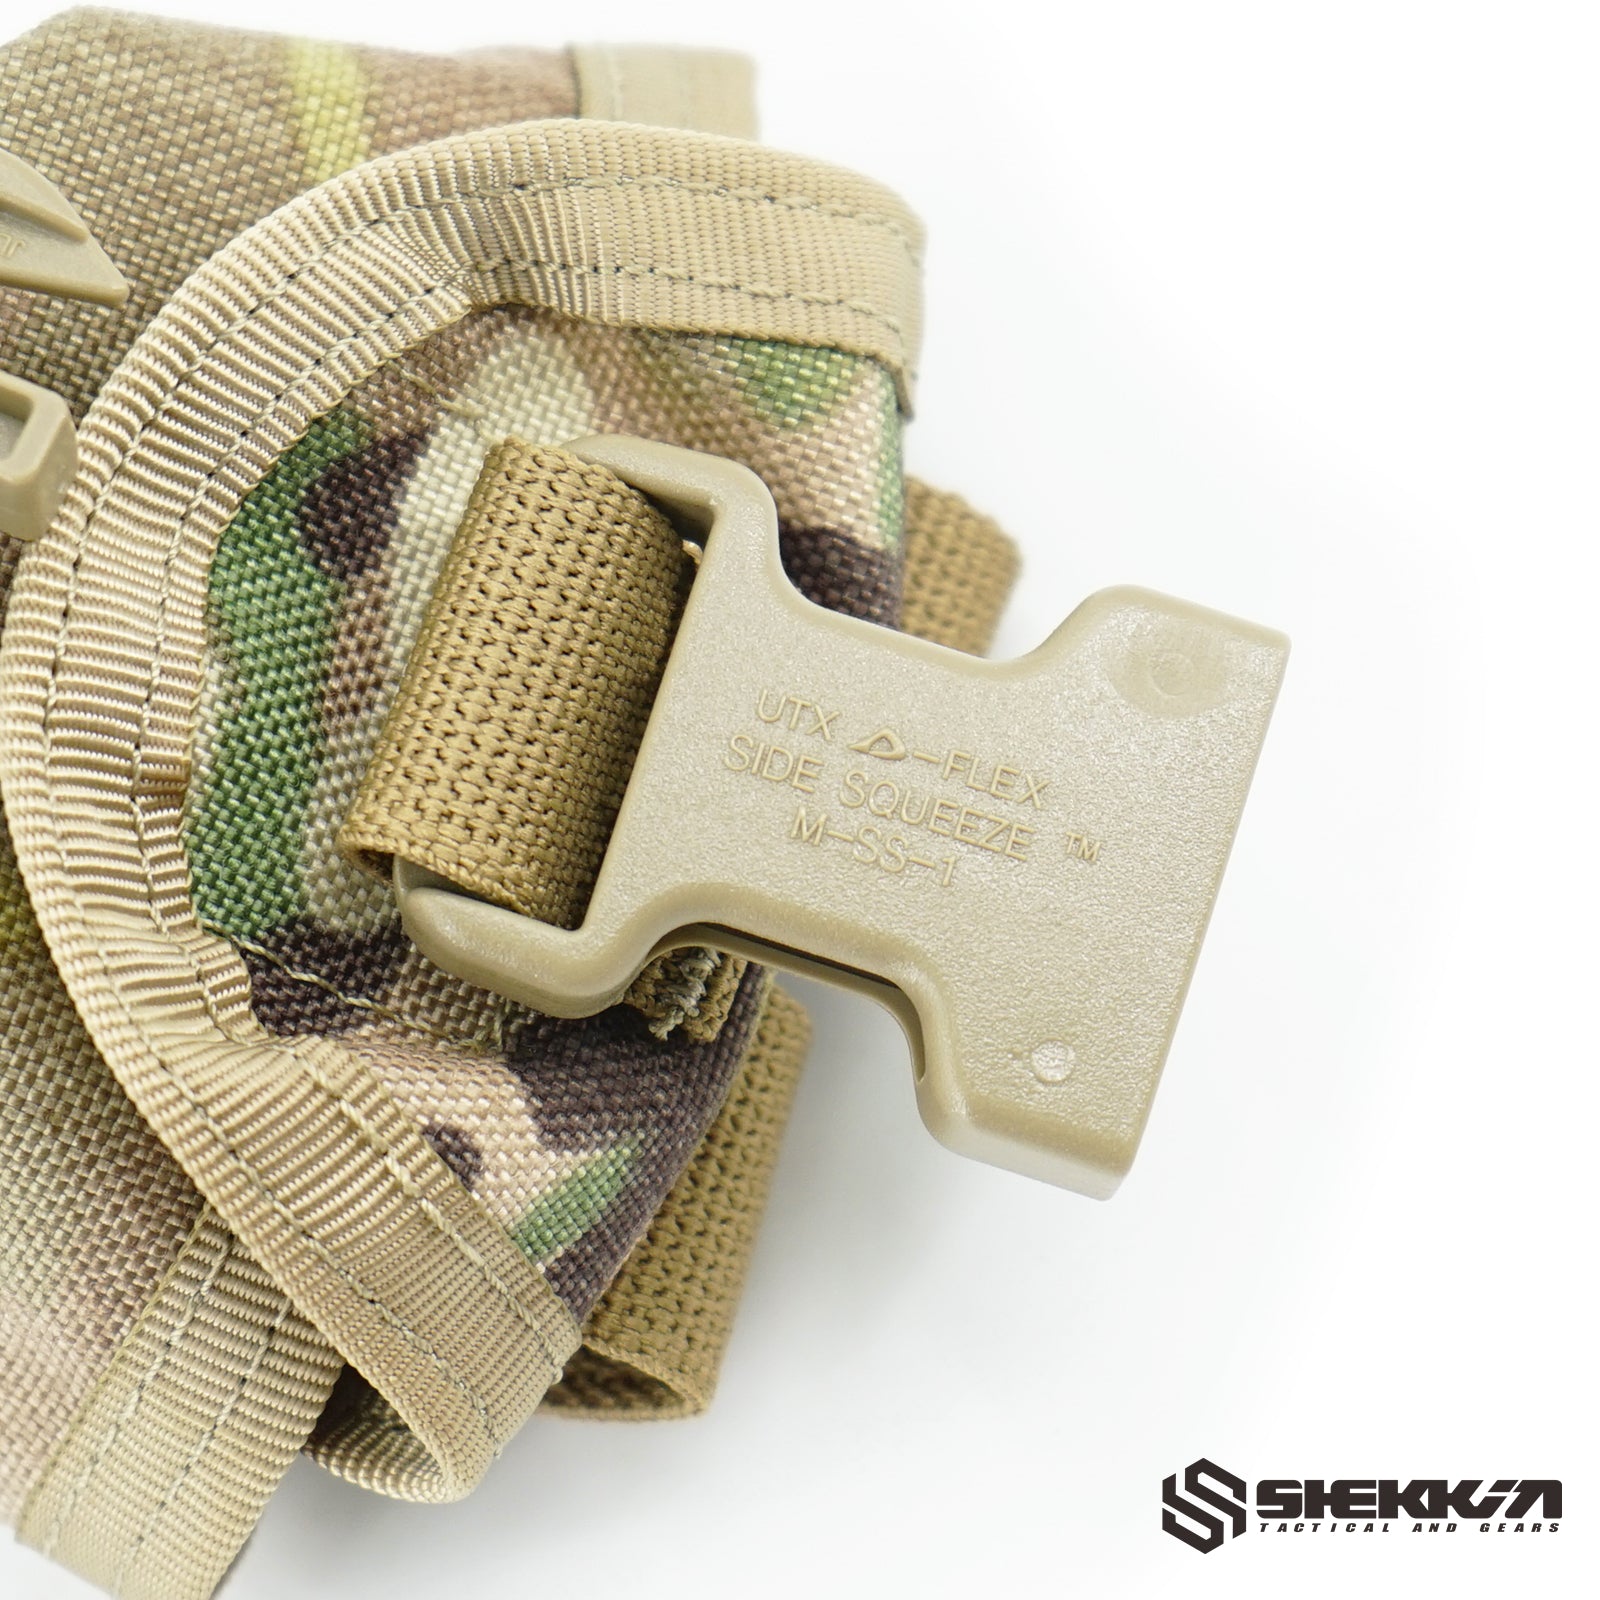 Shekkingears replica AI m67 frag pouch - Shekkin Gears